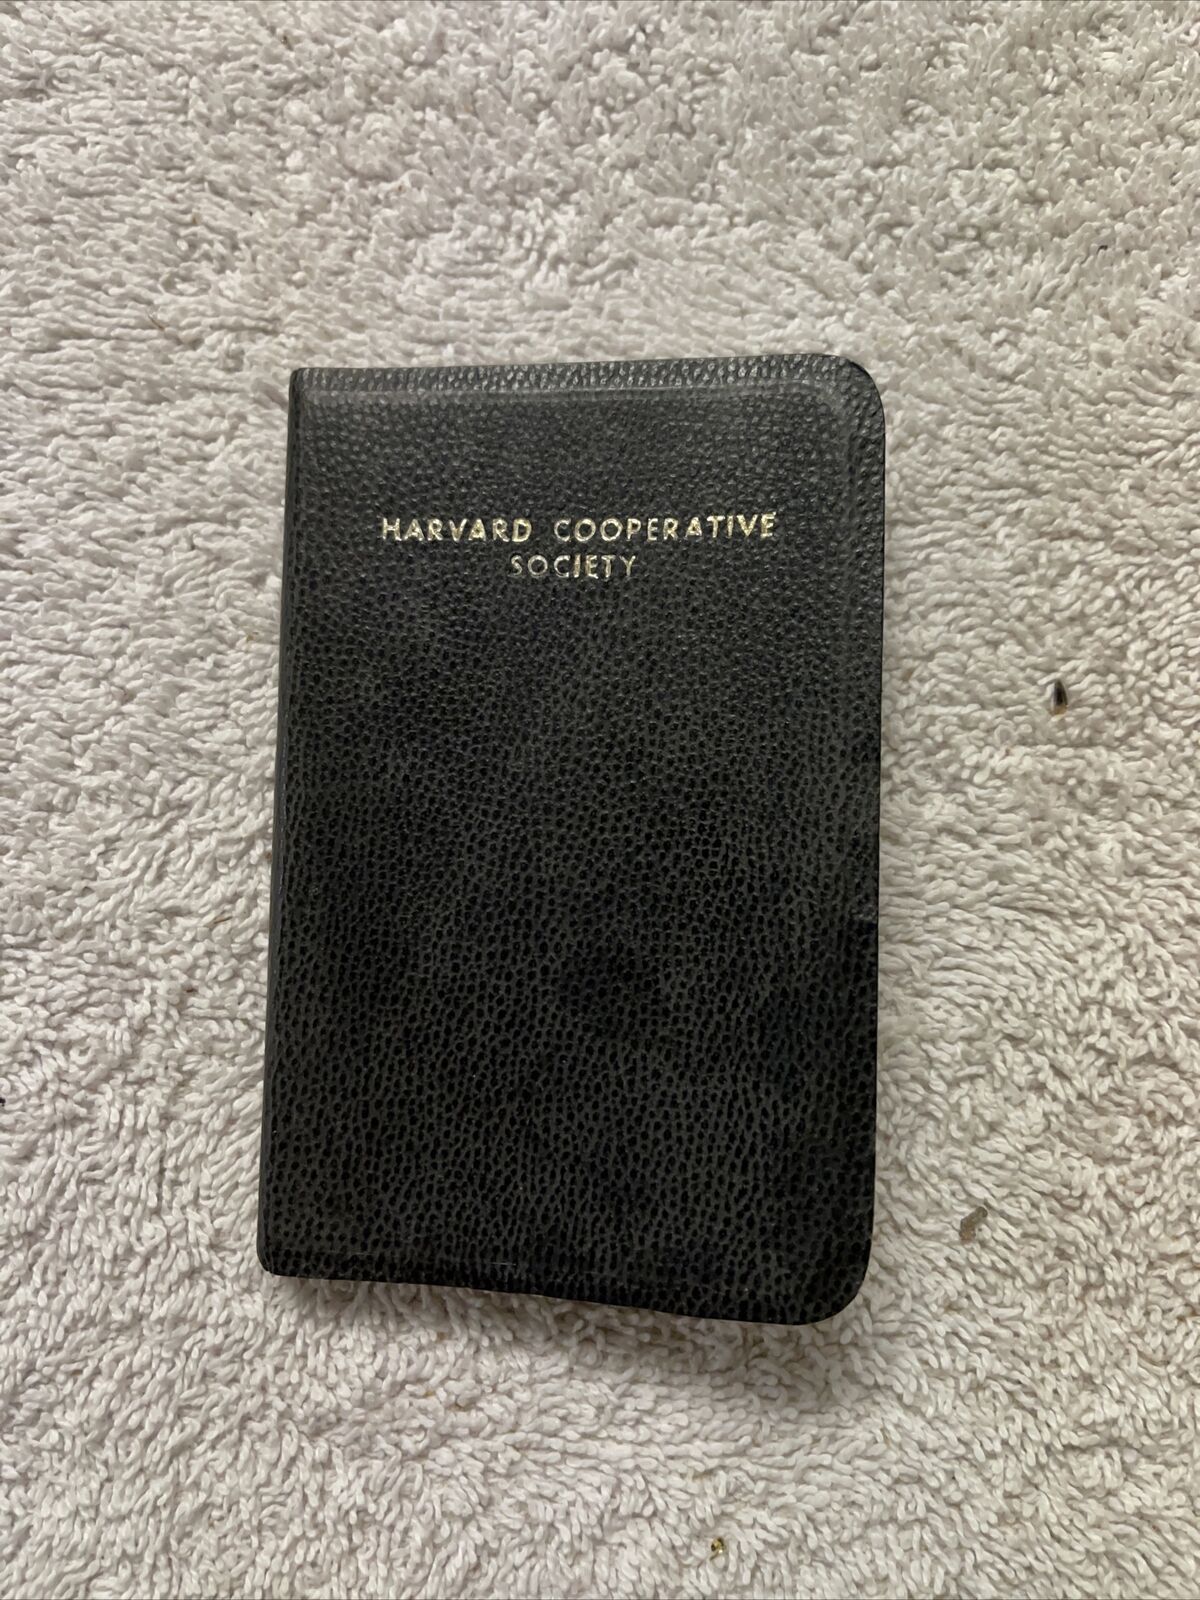 1966 Harvard Coop book Cooperative Society notebook